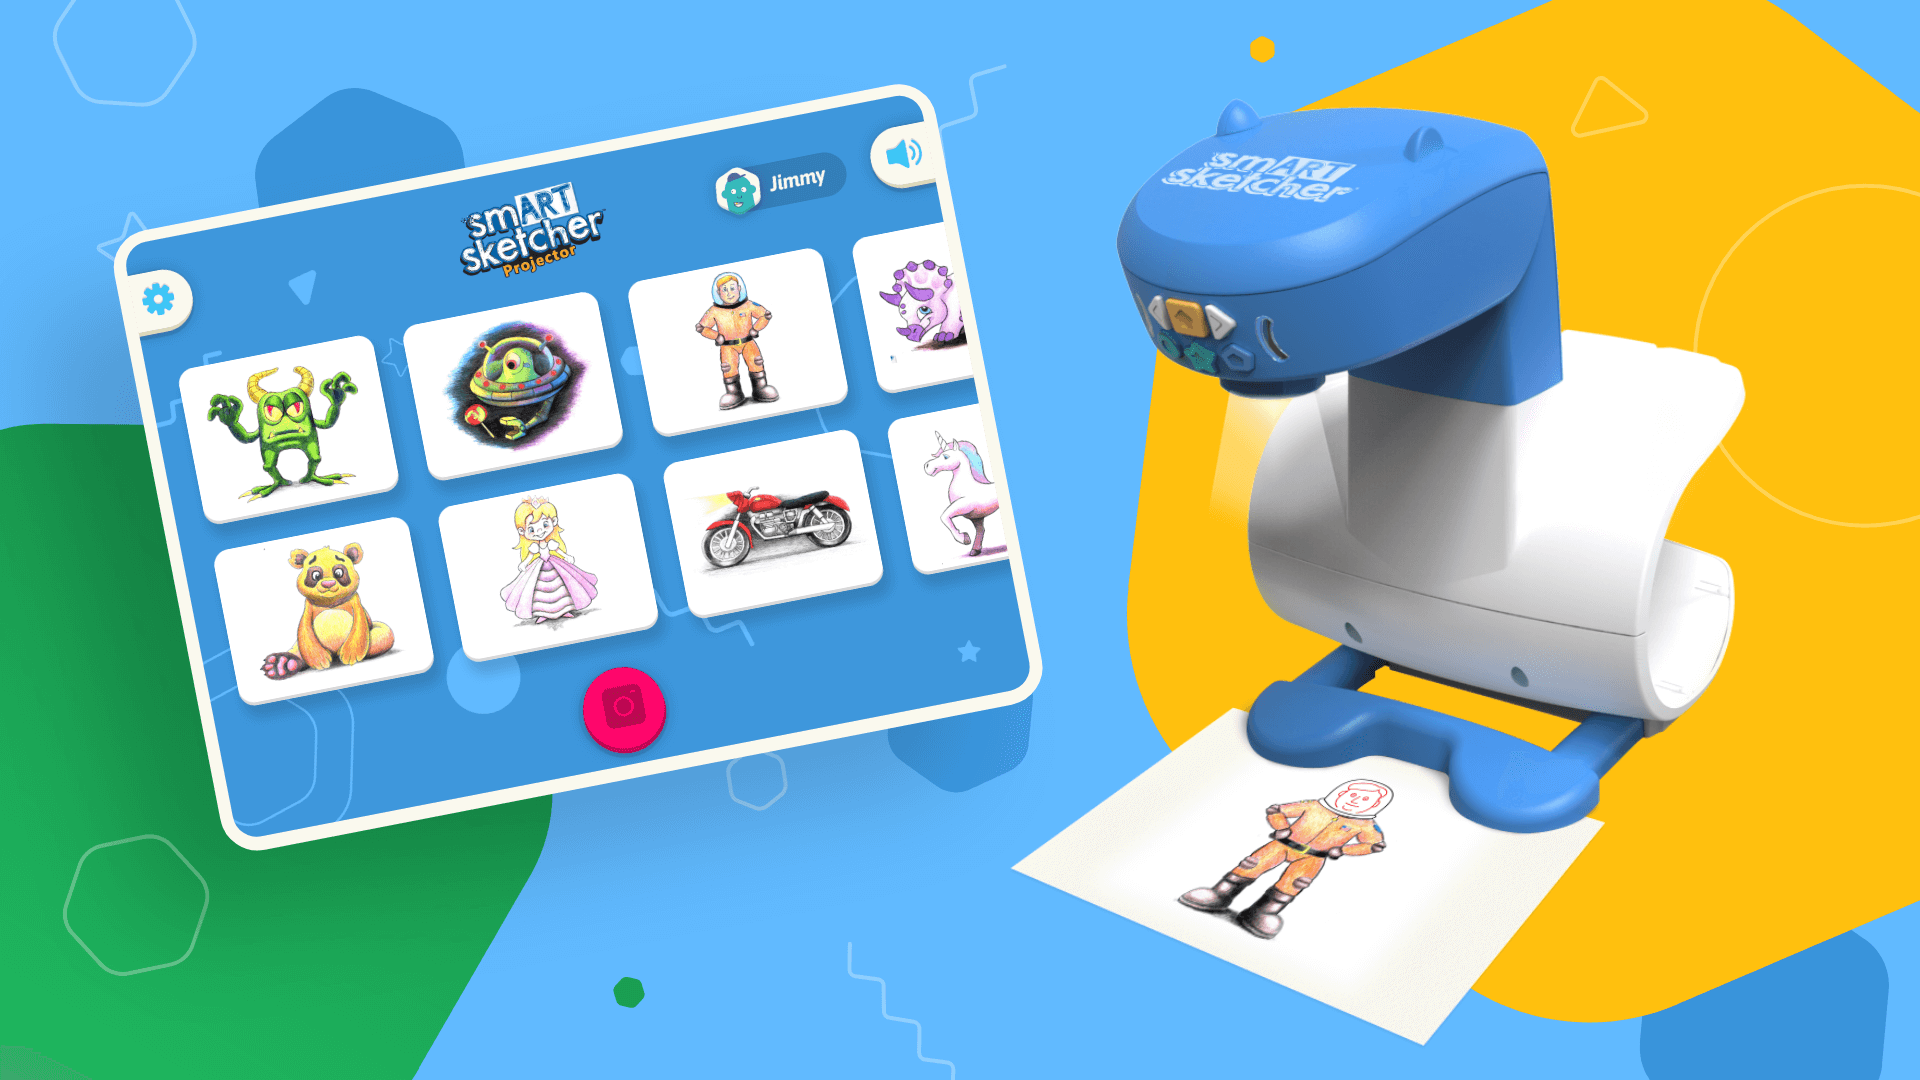 Smart Sketcher IoT toy for kids